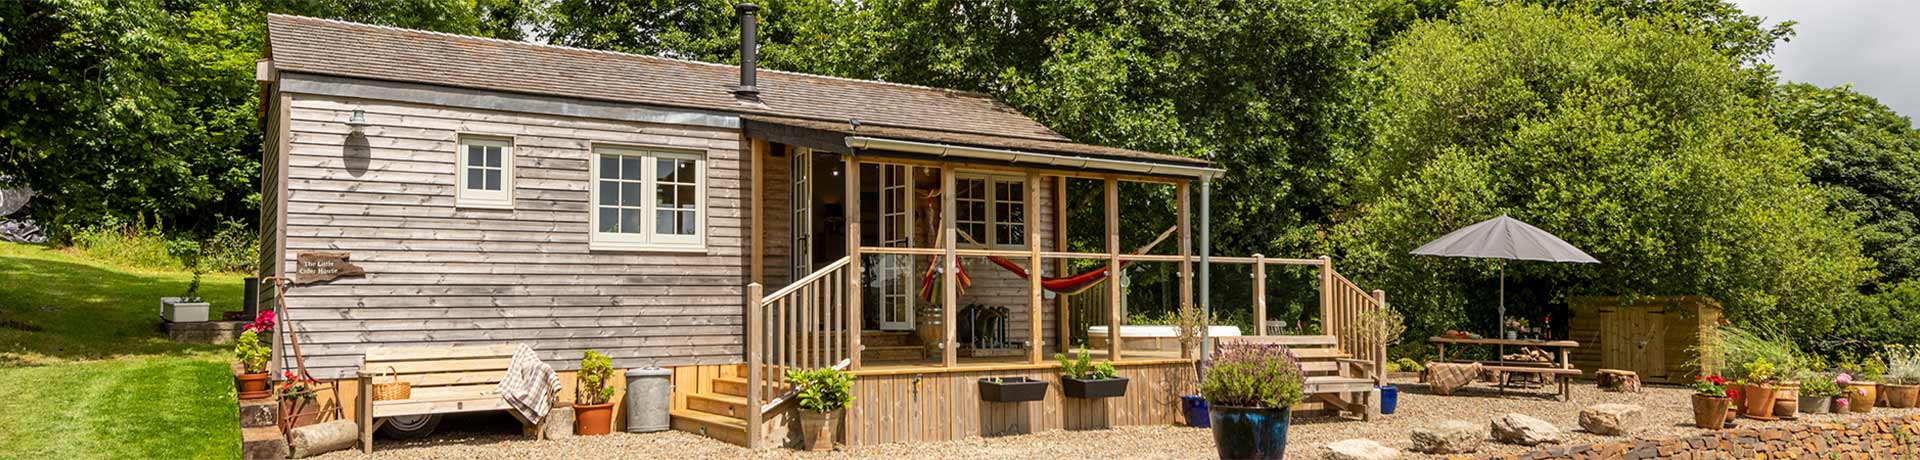 Ten countryside cabins for a spring getaway